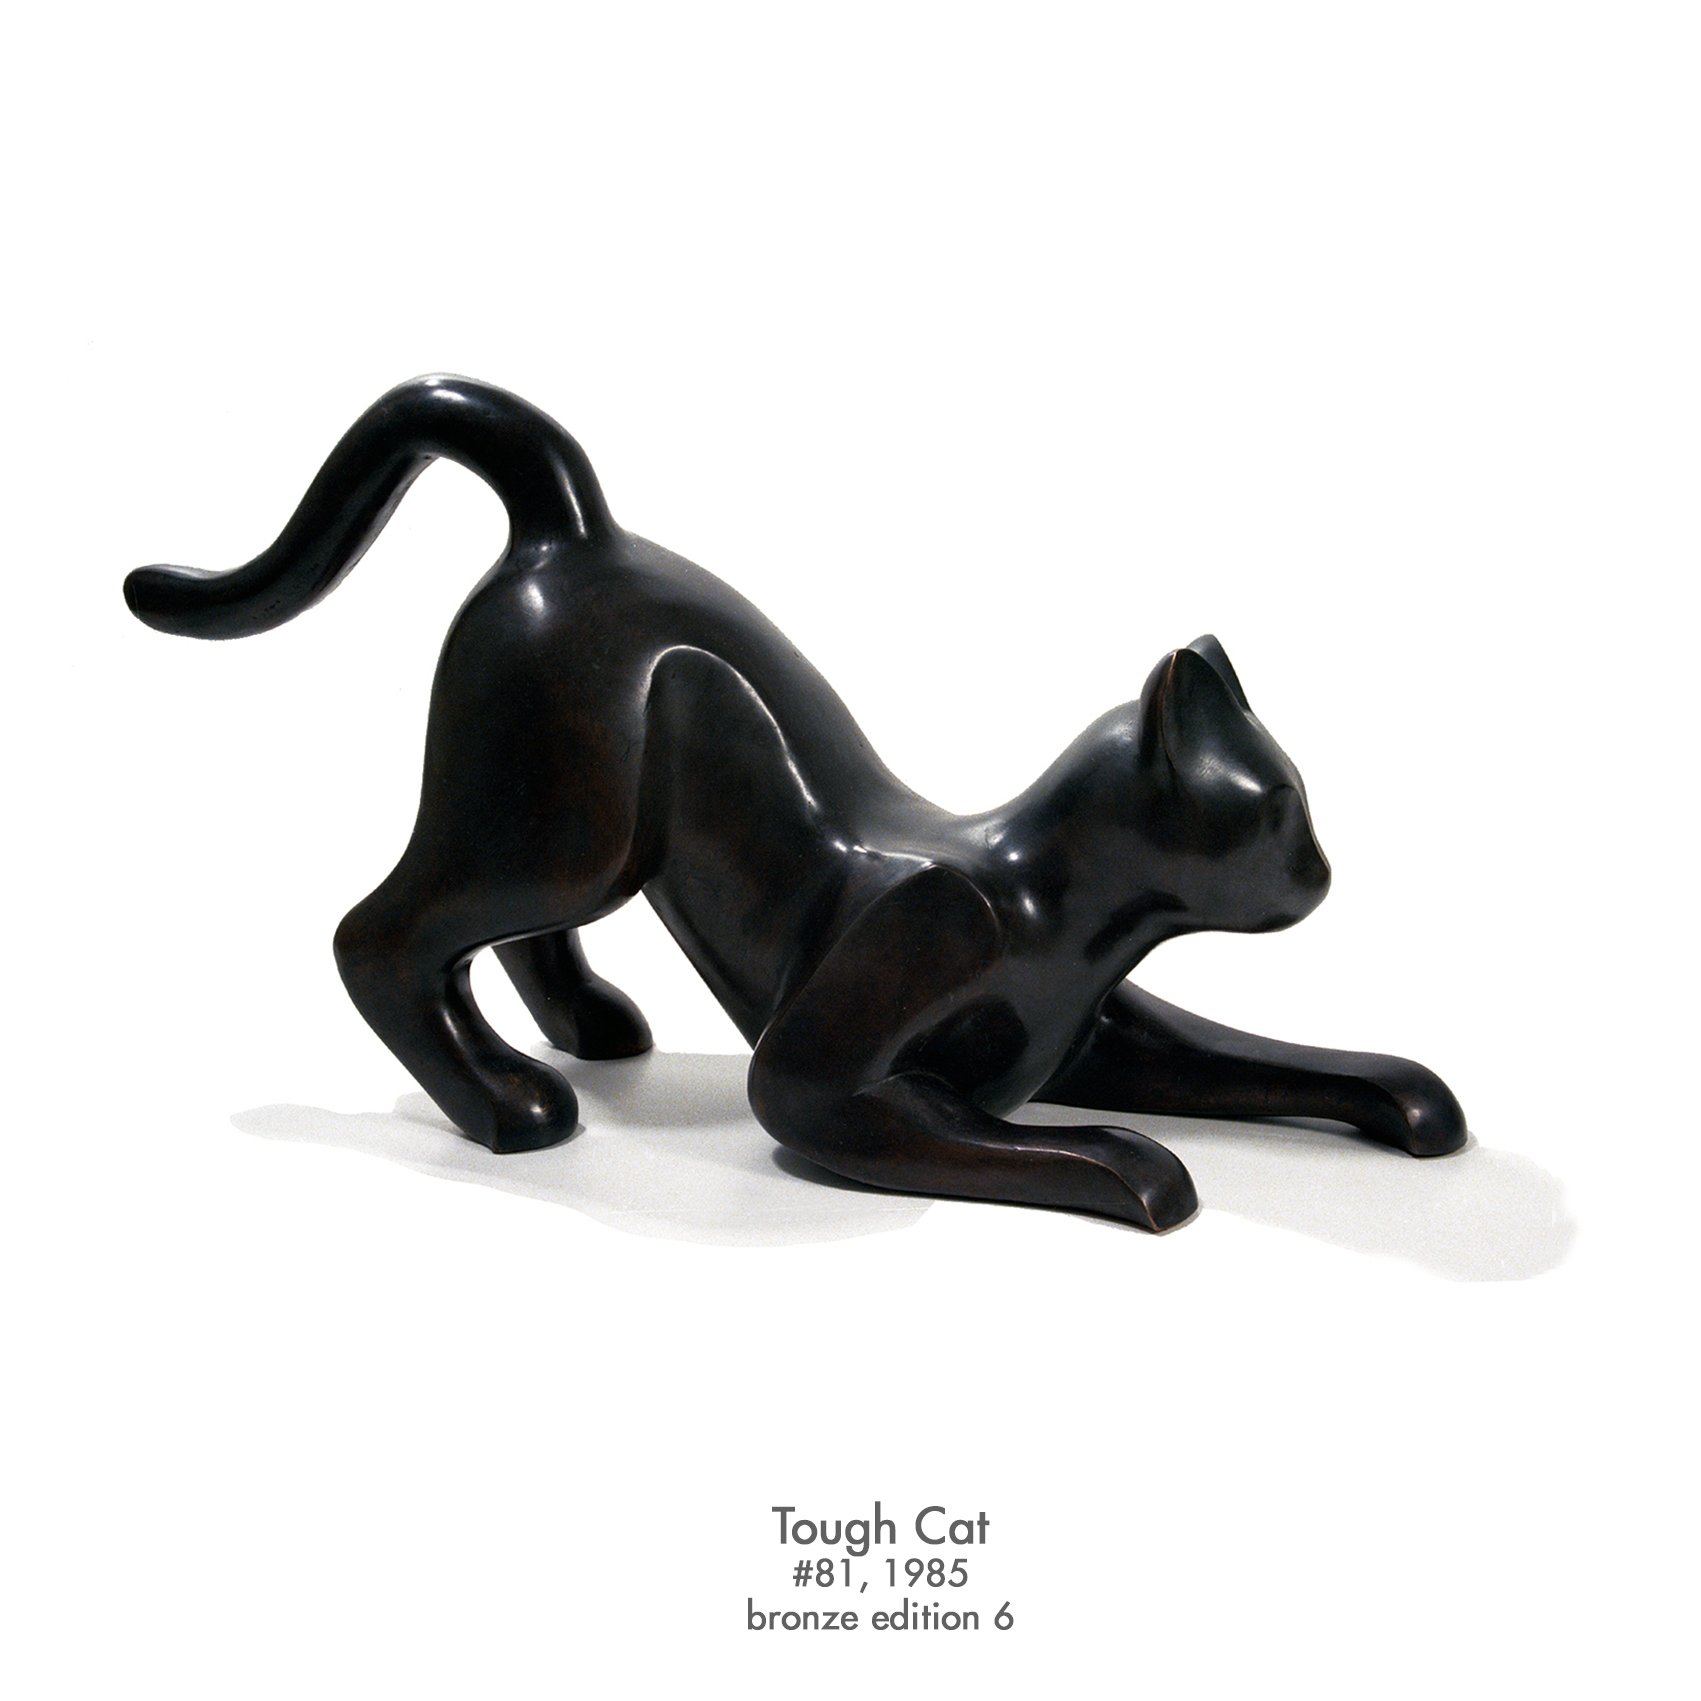 Tough Cat, 1985, bronze, #81